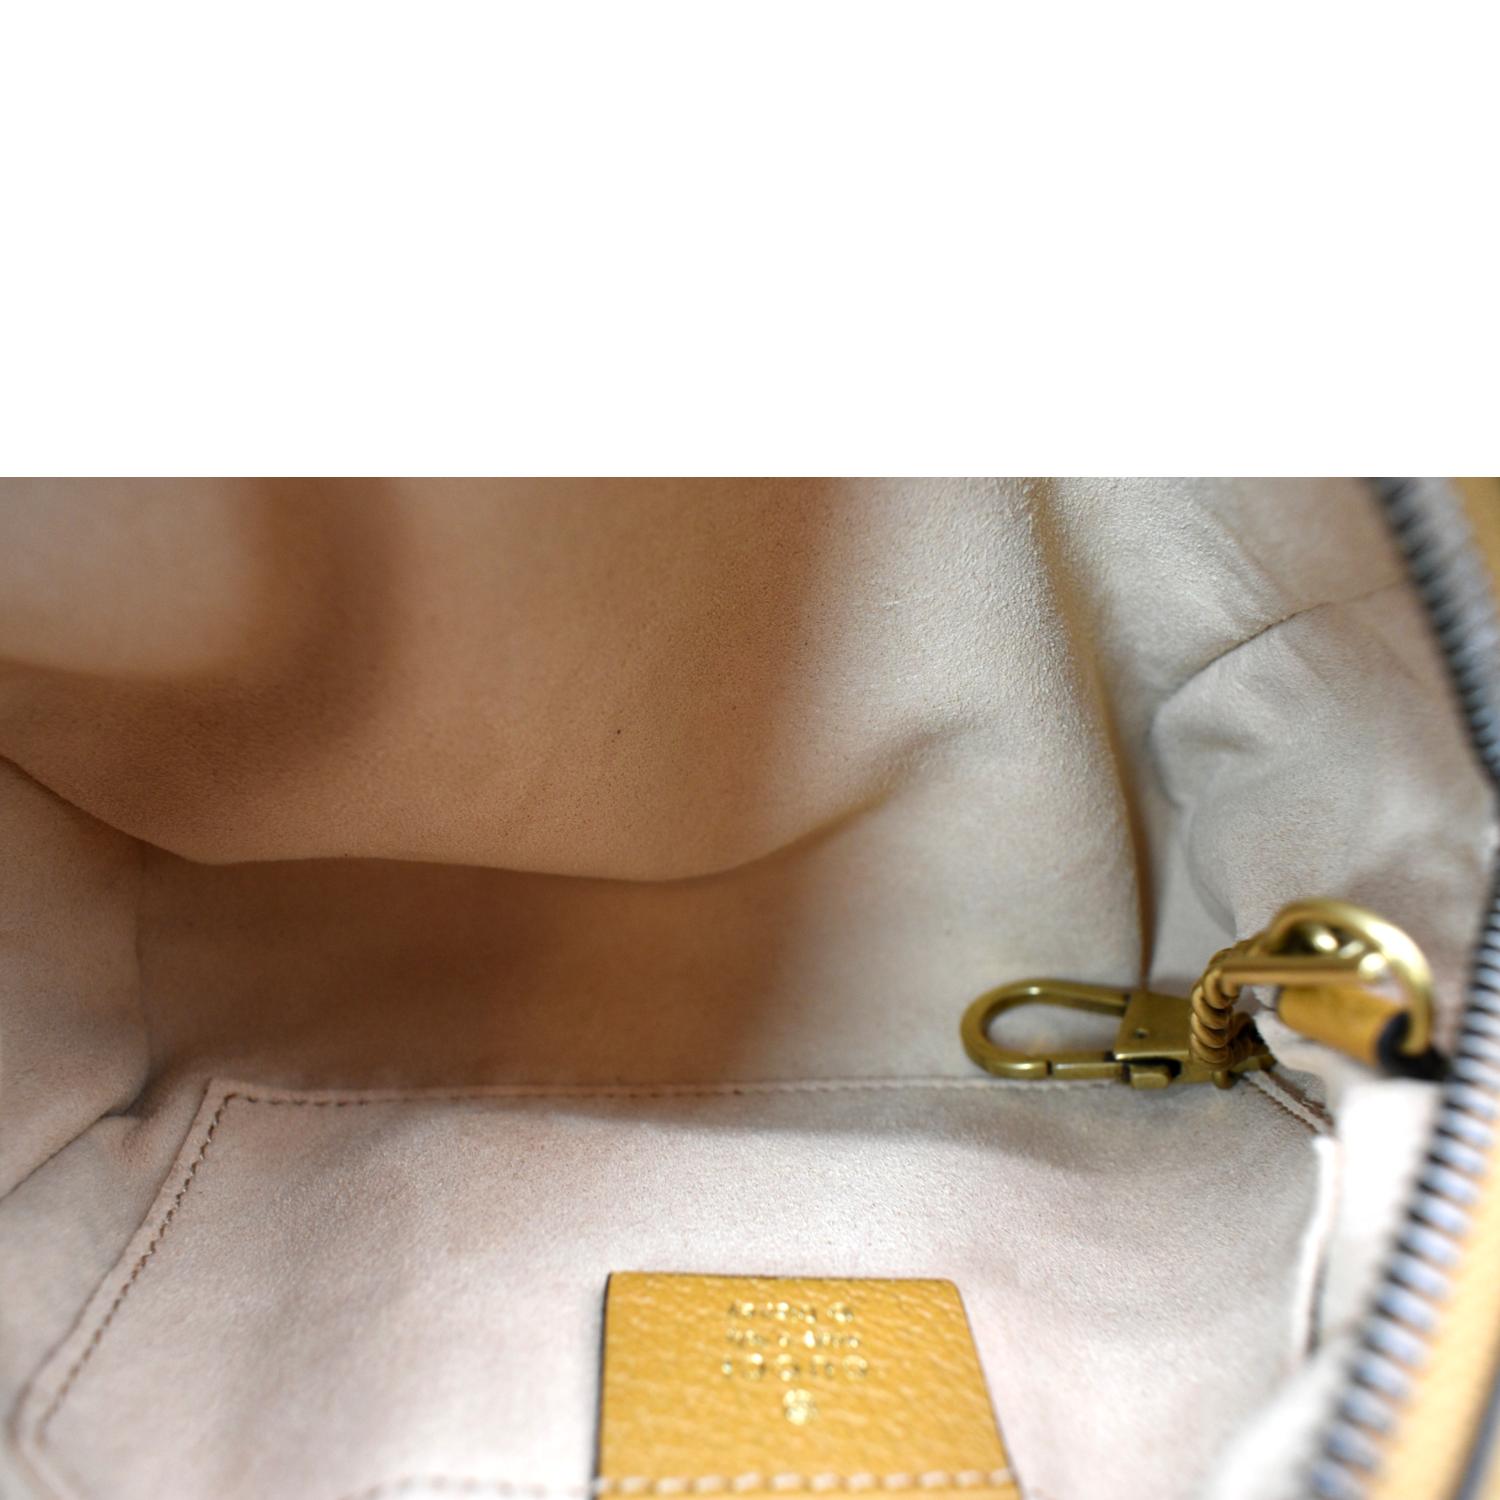 Preloved Gucci Disney Micro GG Supreme Crossbody Bag 602694498979